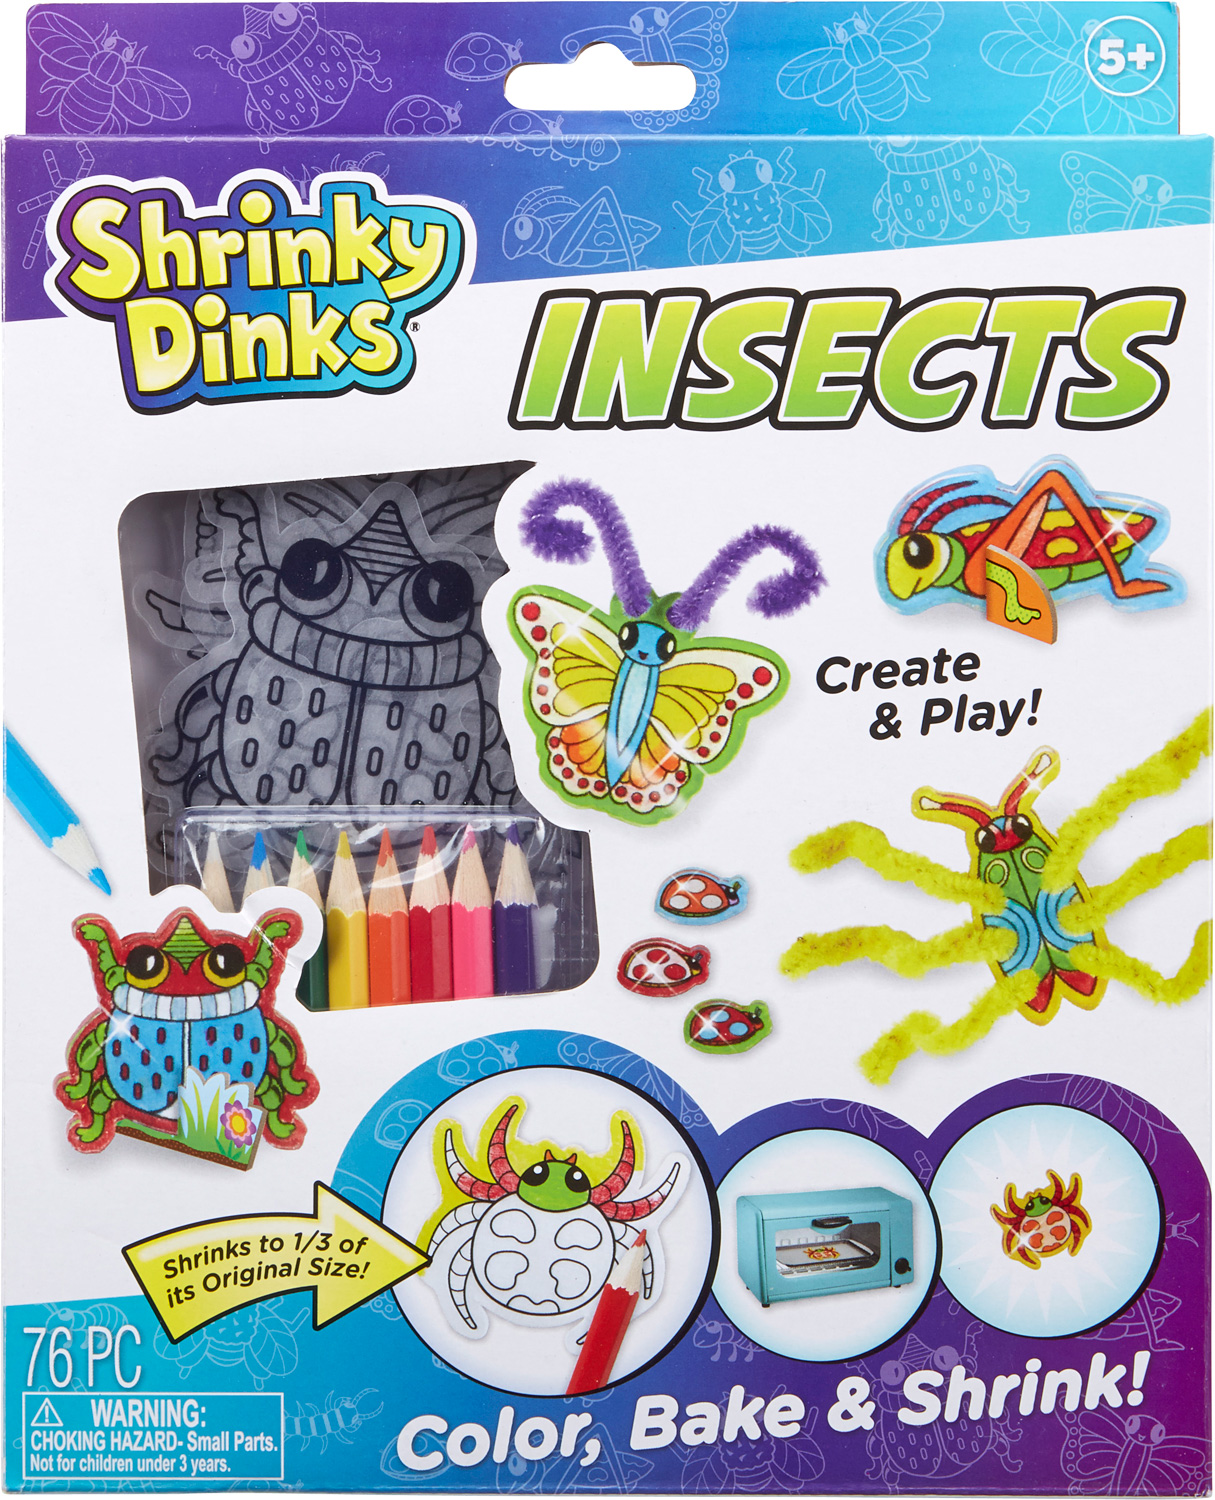 Shrinky Dinks Cool Stuff Activity Set, Kids Art and Craft Activity Set